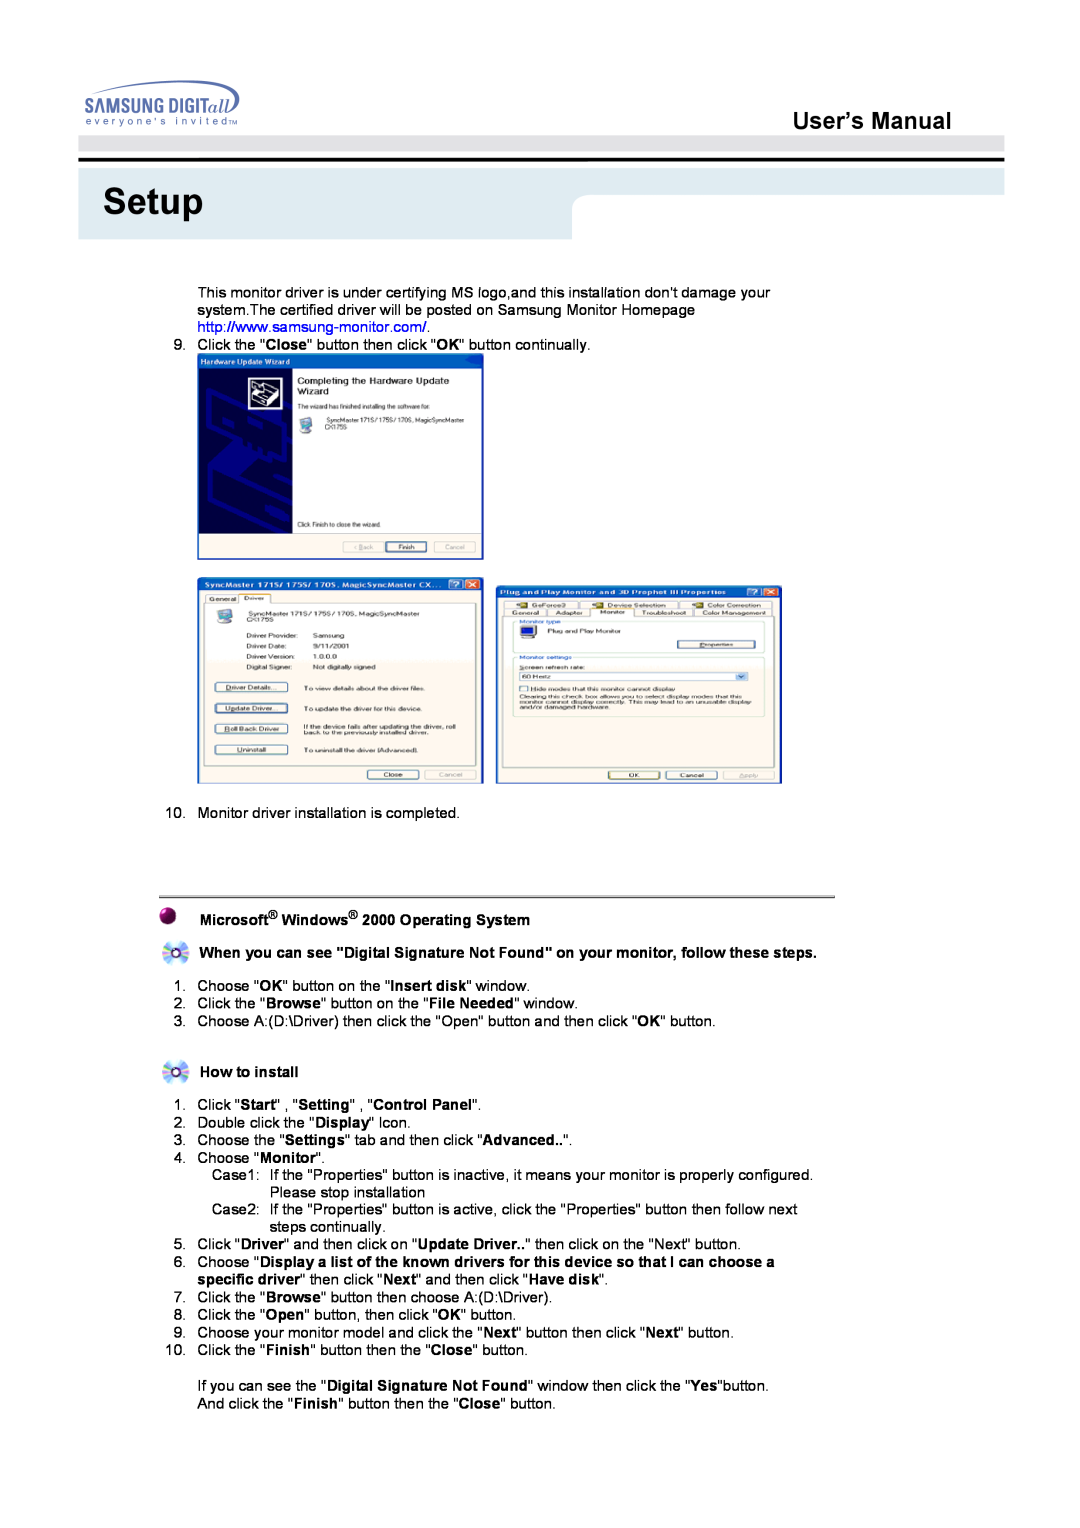 Samsung 172S manual Setup, User’s Manual, Microsoft Windows 2000 Operating System 